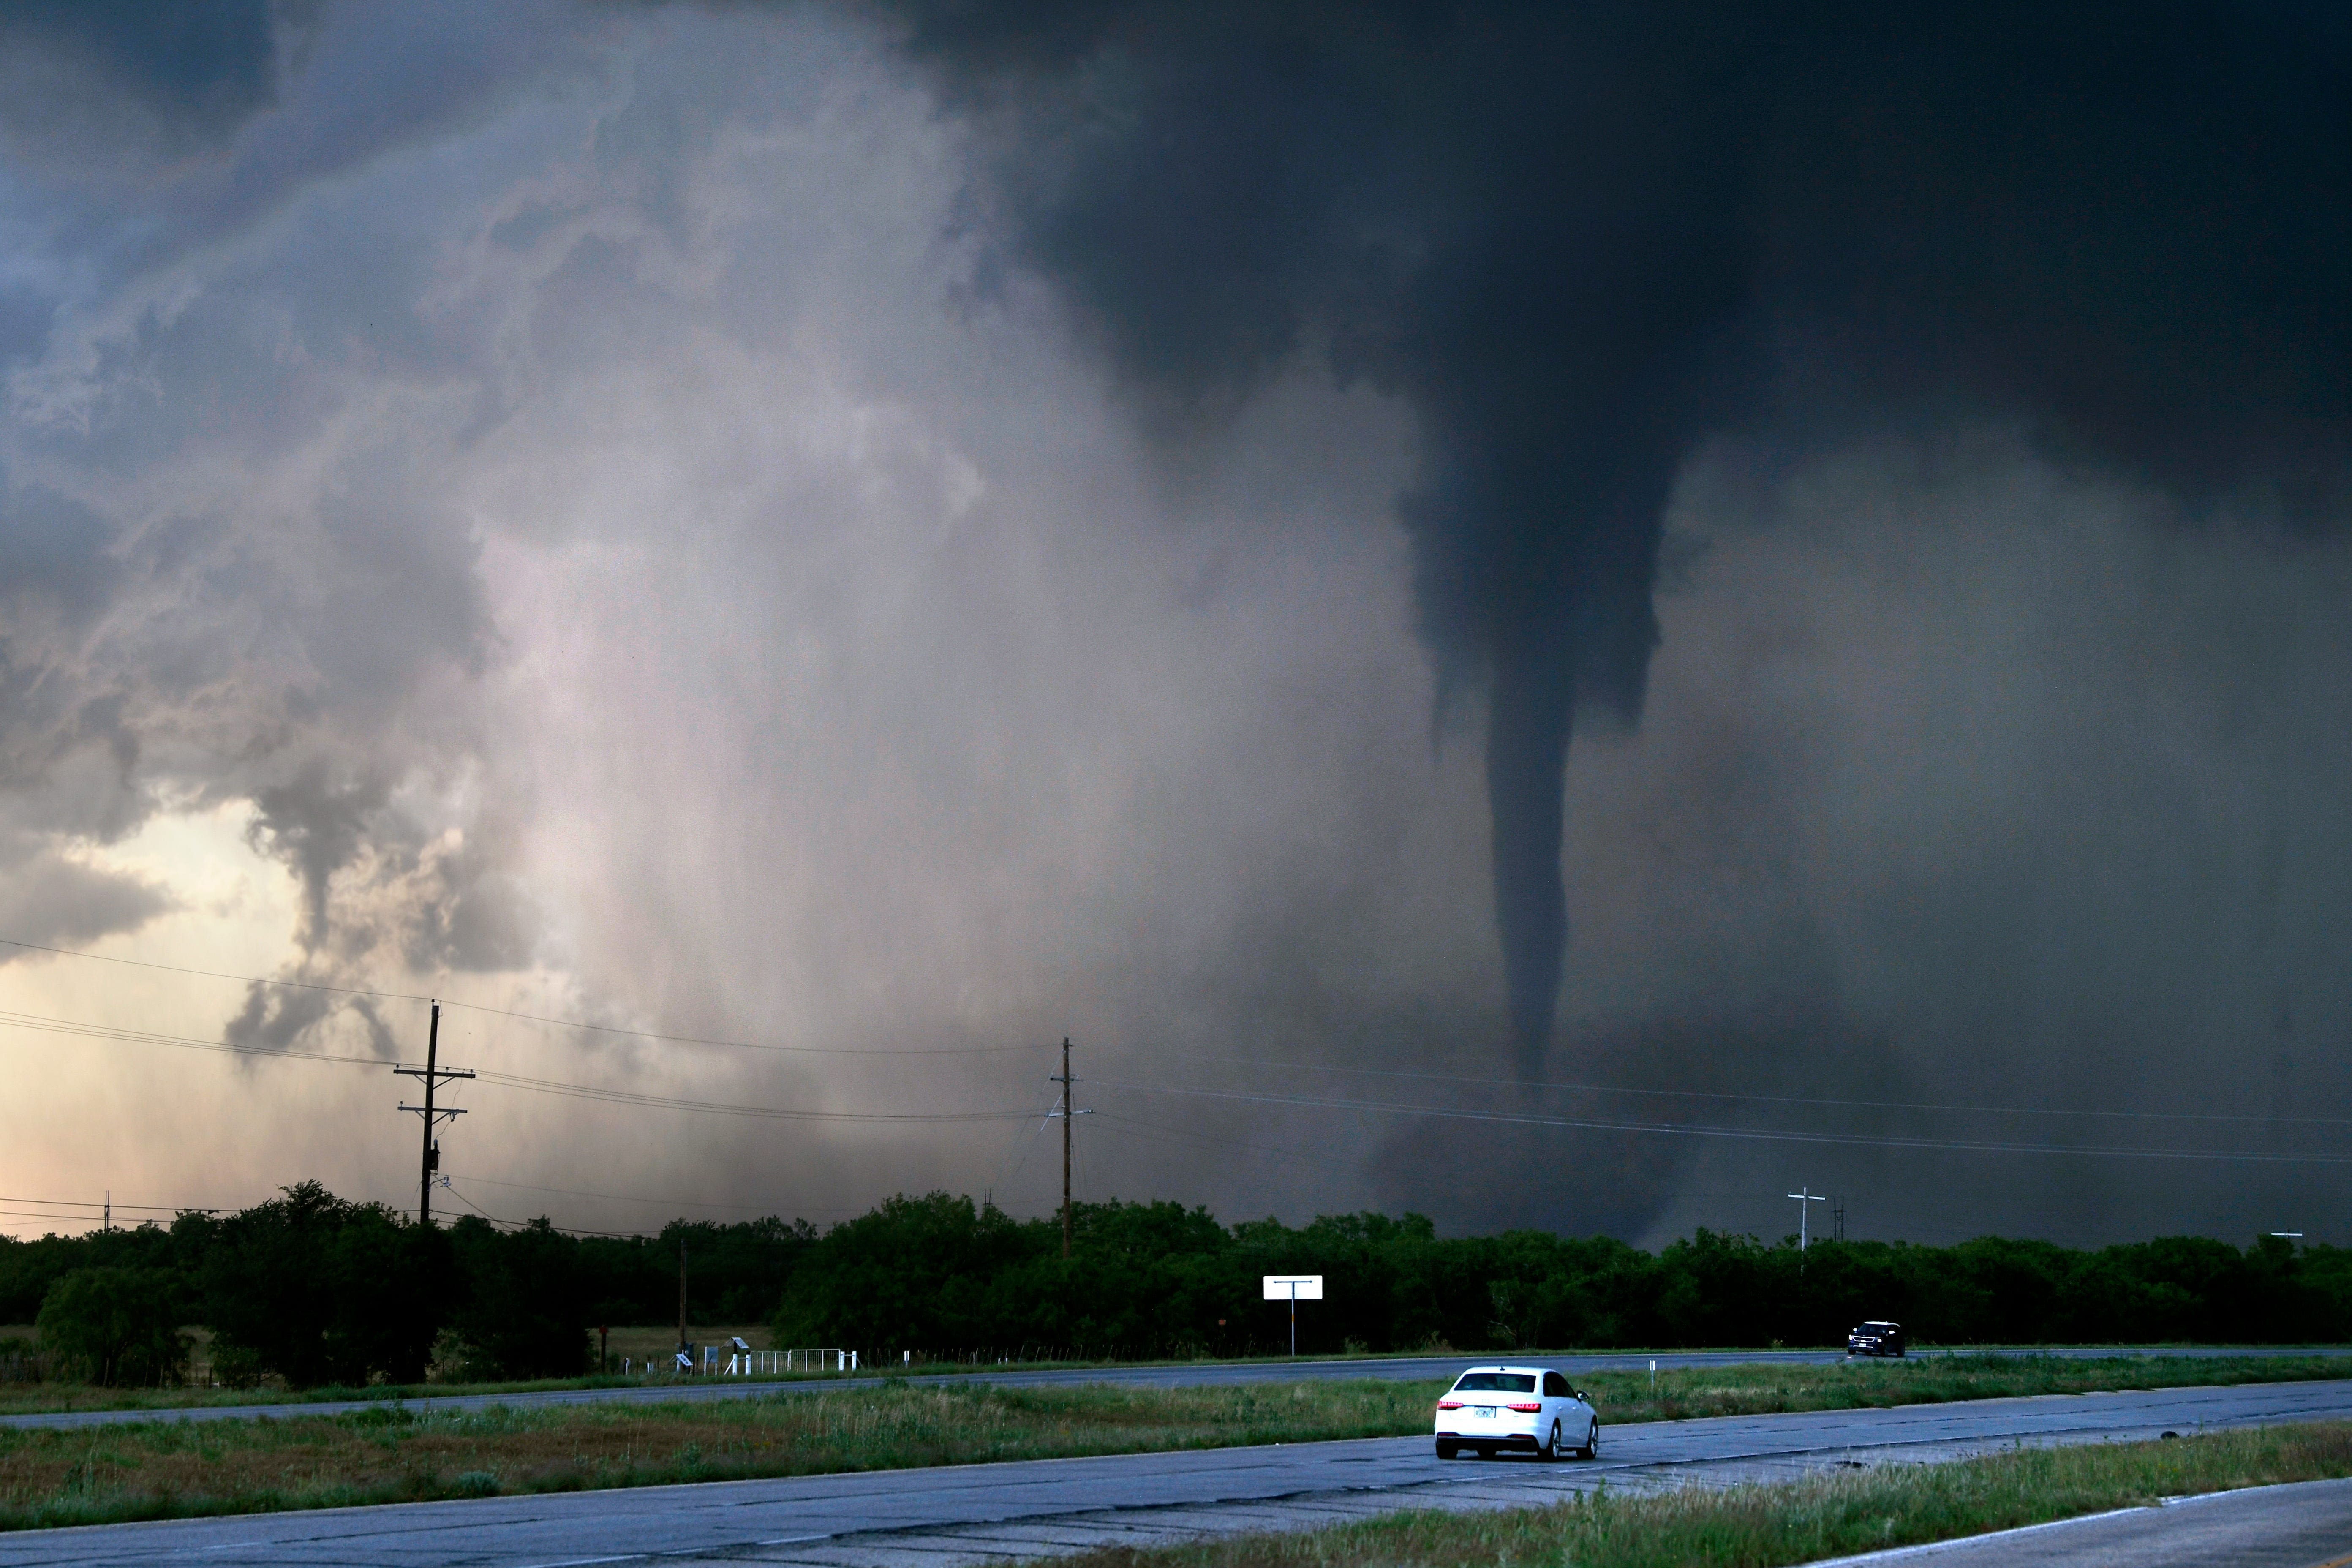 As 'Twisters' hits theaters, experts warn of increasing tornado danger